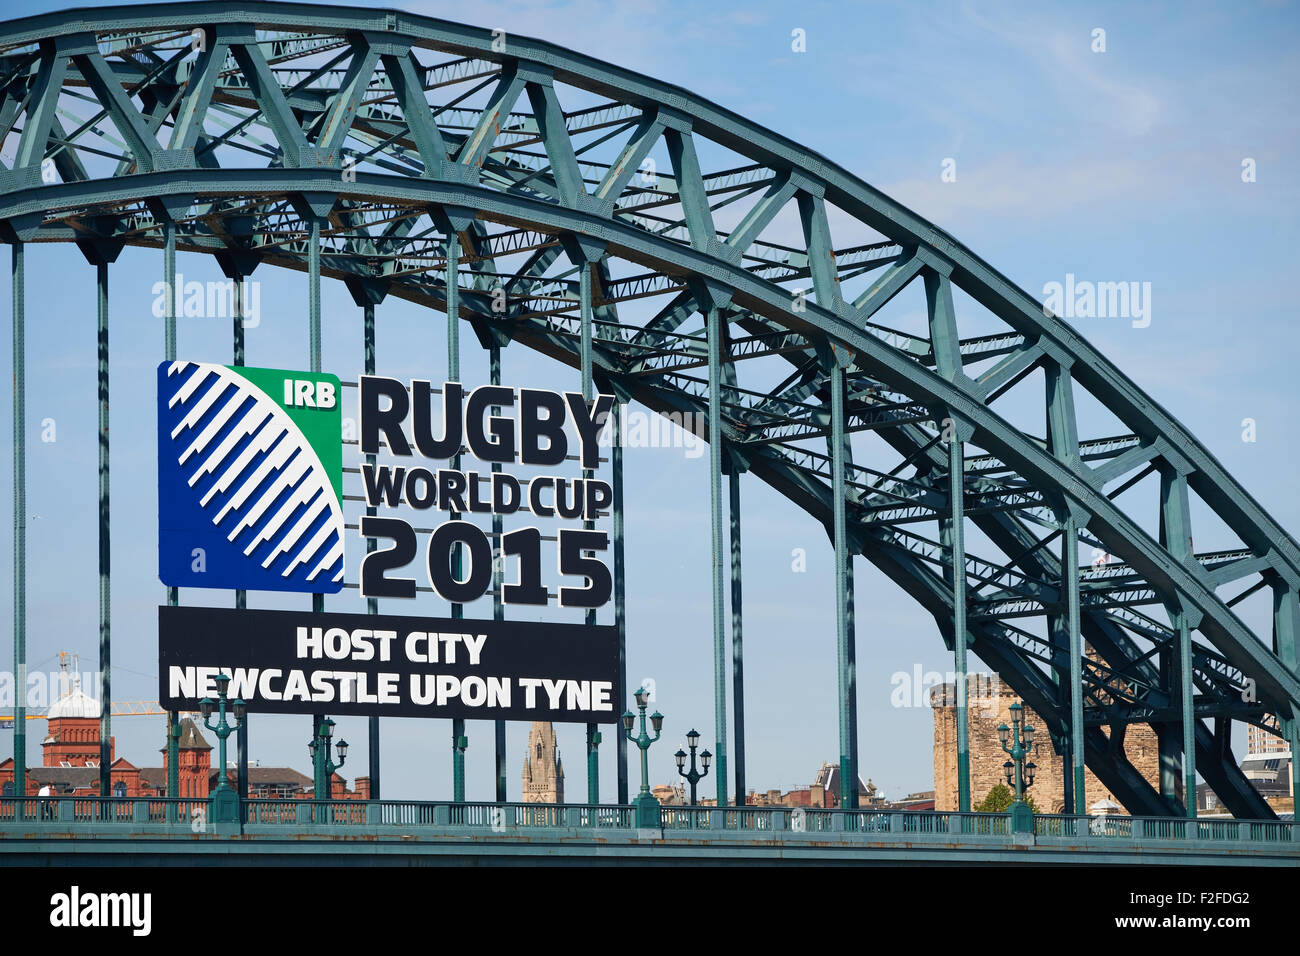 Rugby World Cup 2015 Gastgeber anmelden die Tyne Bridge, Newcastle Upon Tyne, UK. Stockfoto